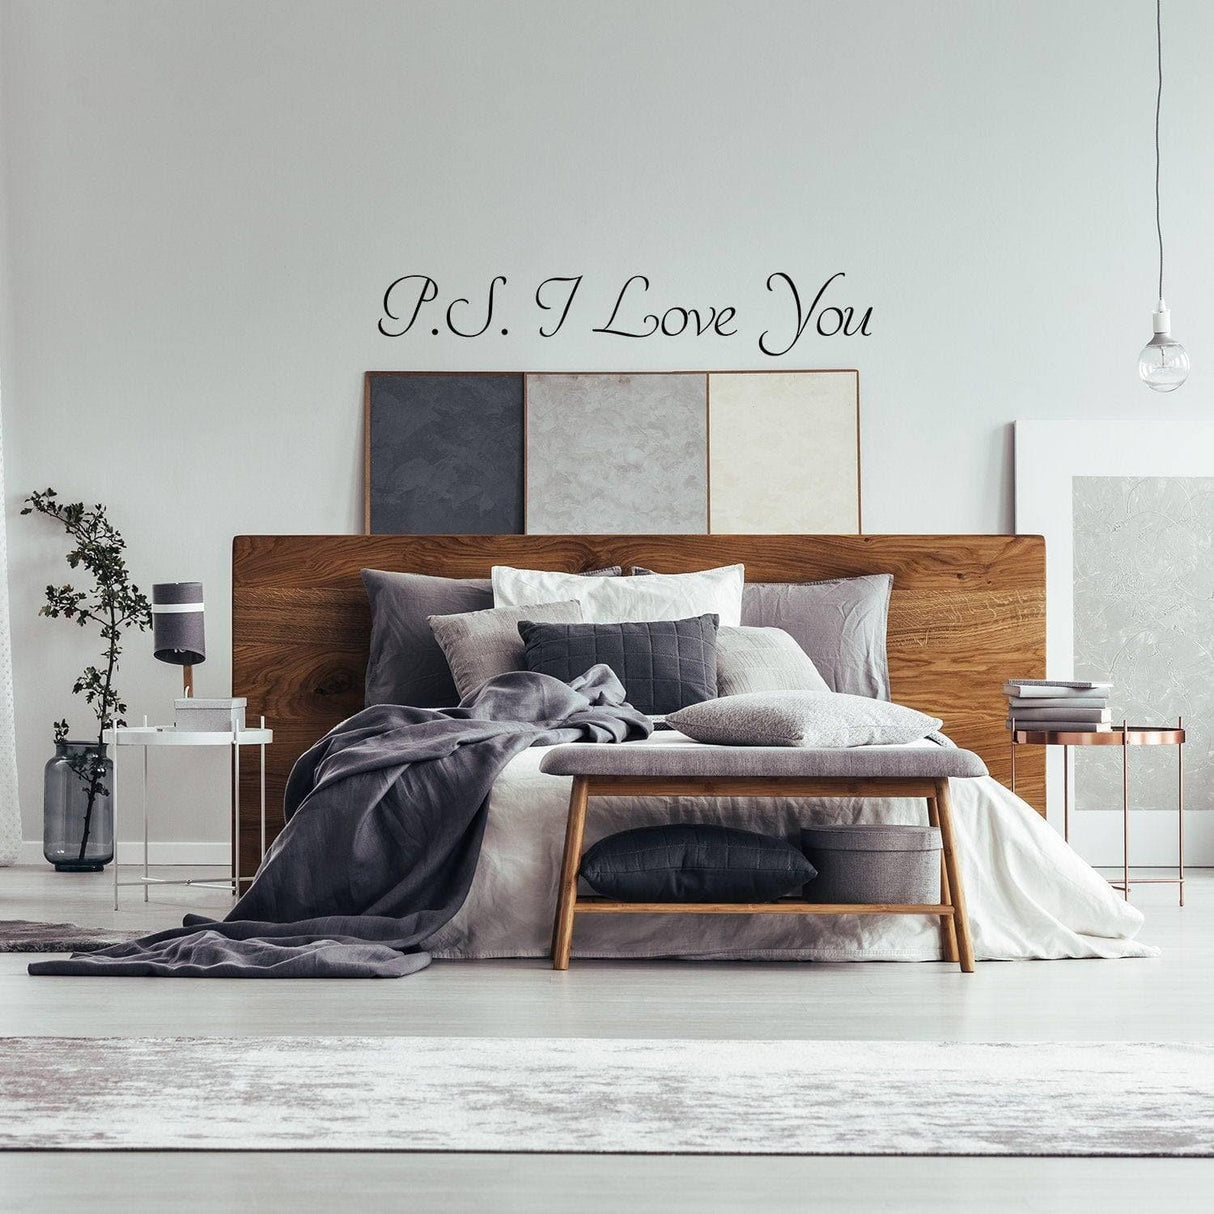 Romantic Bedroom Wall Sticker Quote – Love Decords Vinyl - Decal